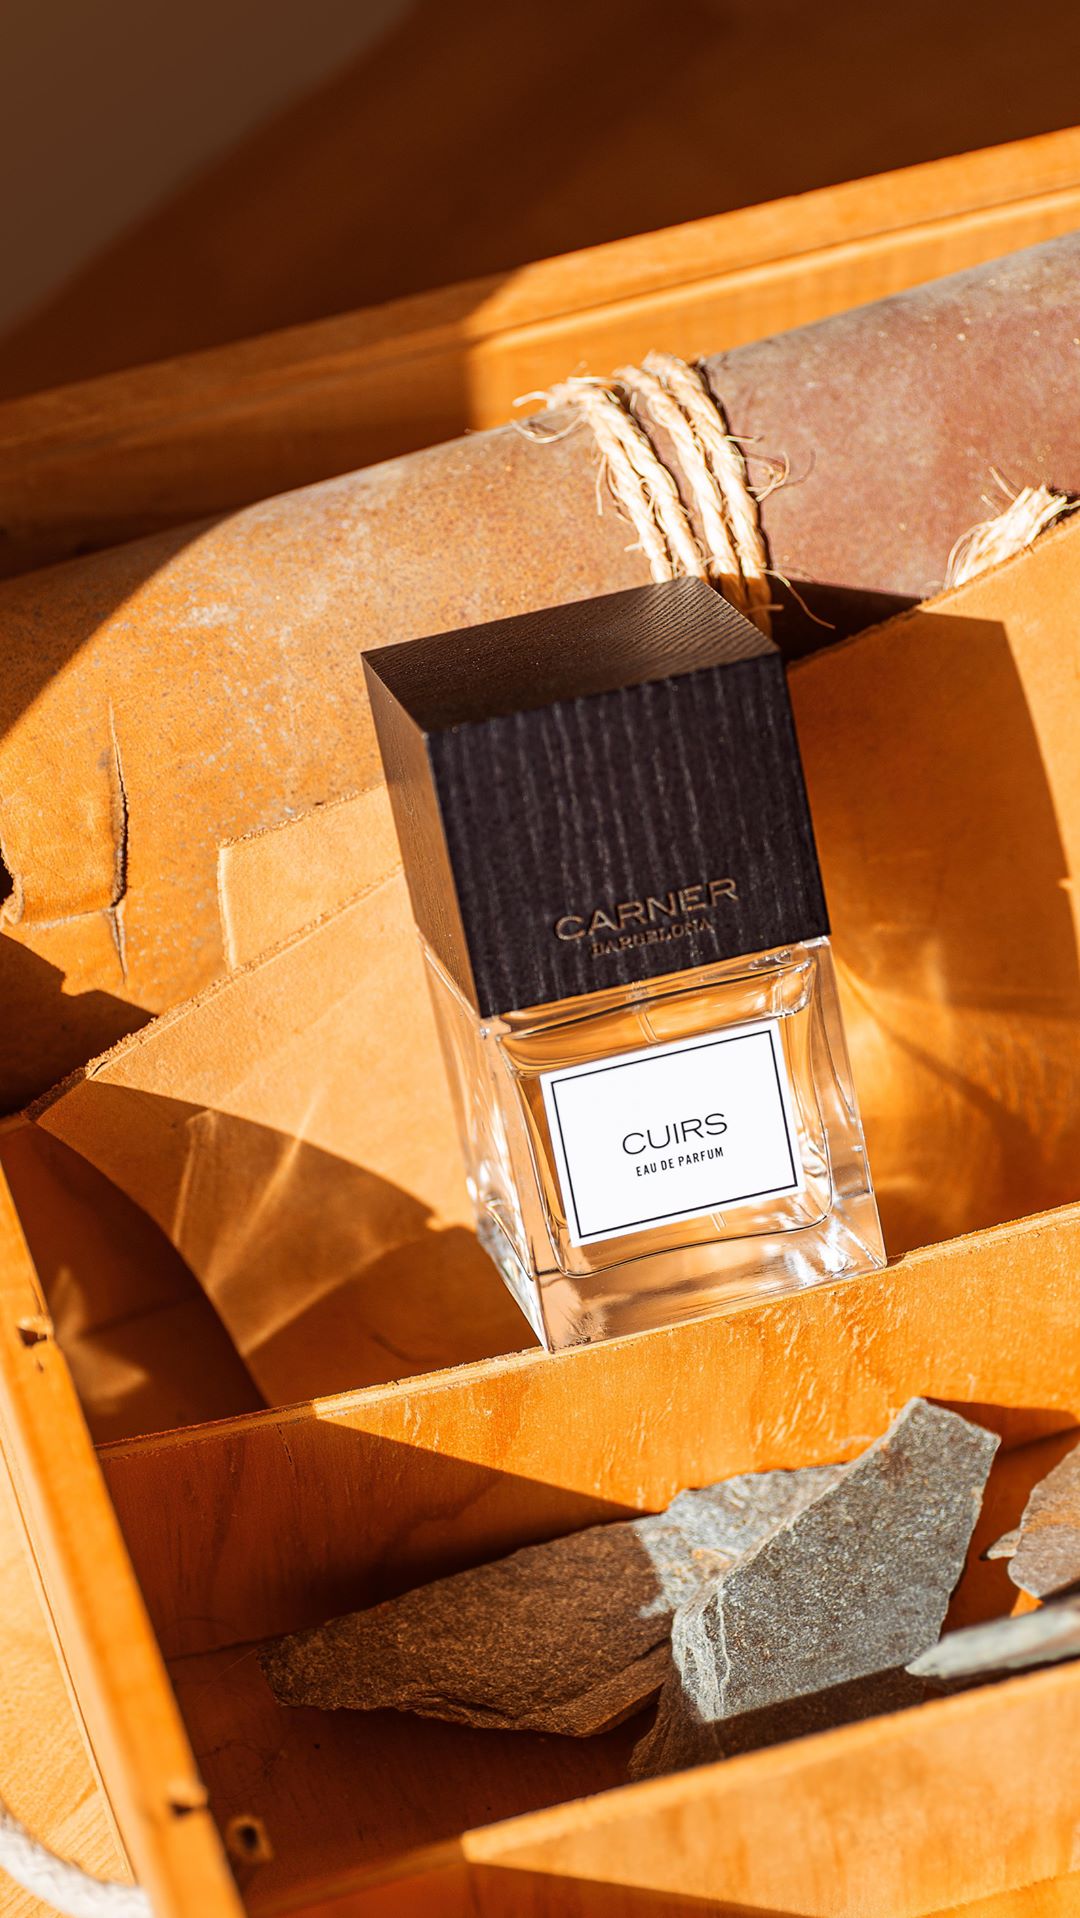 CARNER BARCELONA • Perfumes - Sara Carner, our founder, talks about Cuirs
·
·
·
#cuirs #carnerbarcelona #carner #barcelona #nicheperfume #perfume #fragrance #aroma #leather #igtv